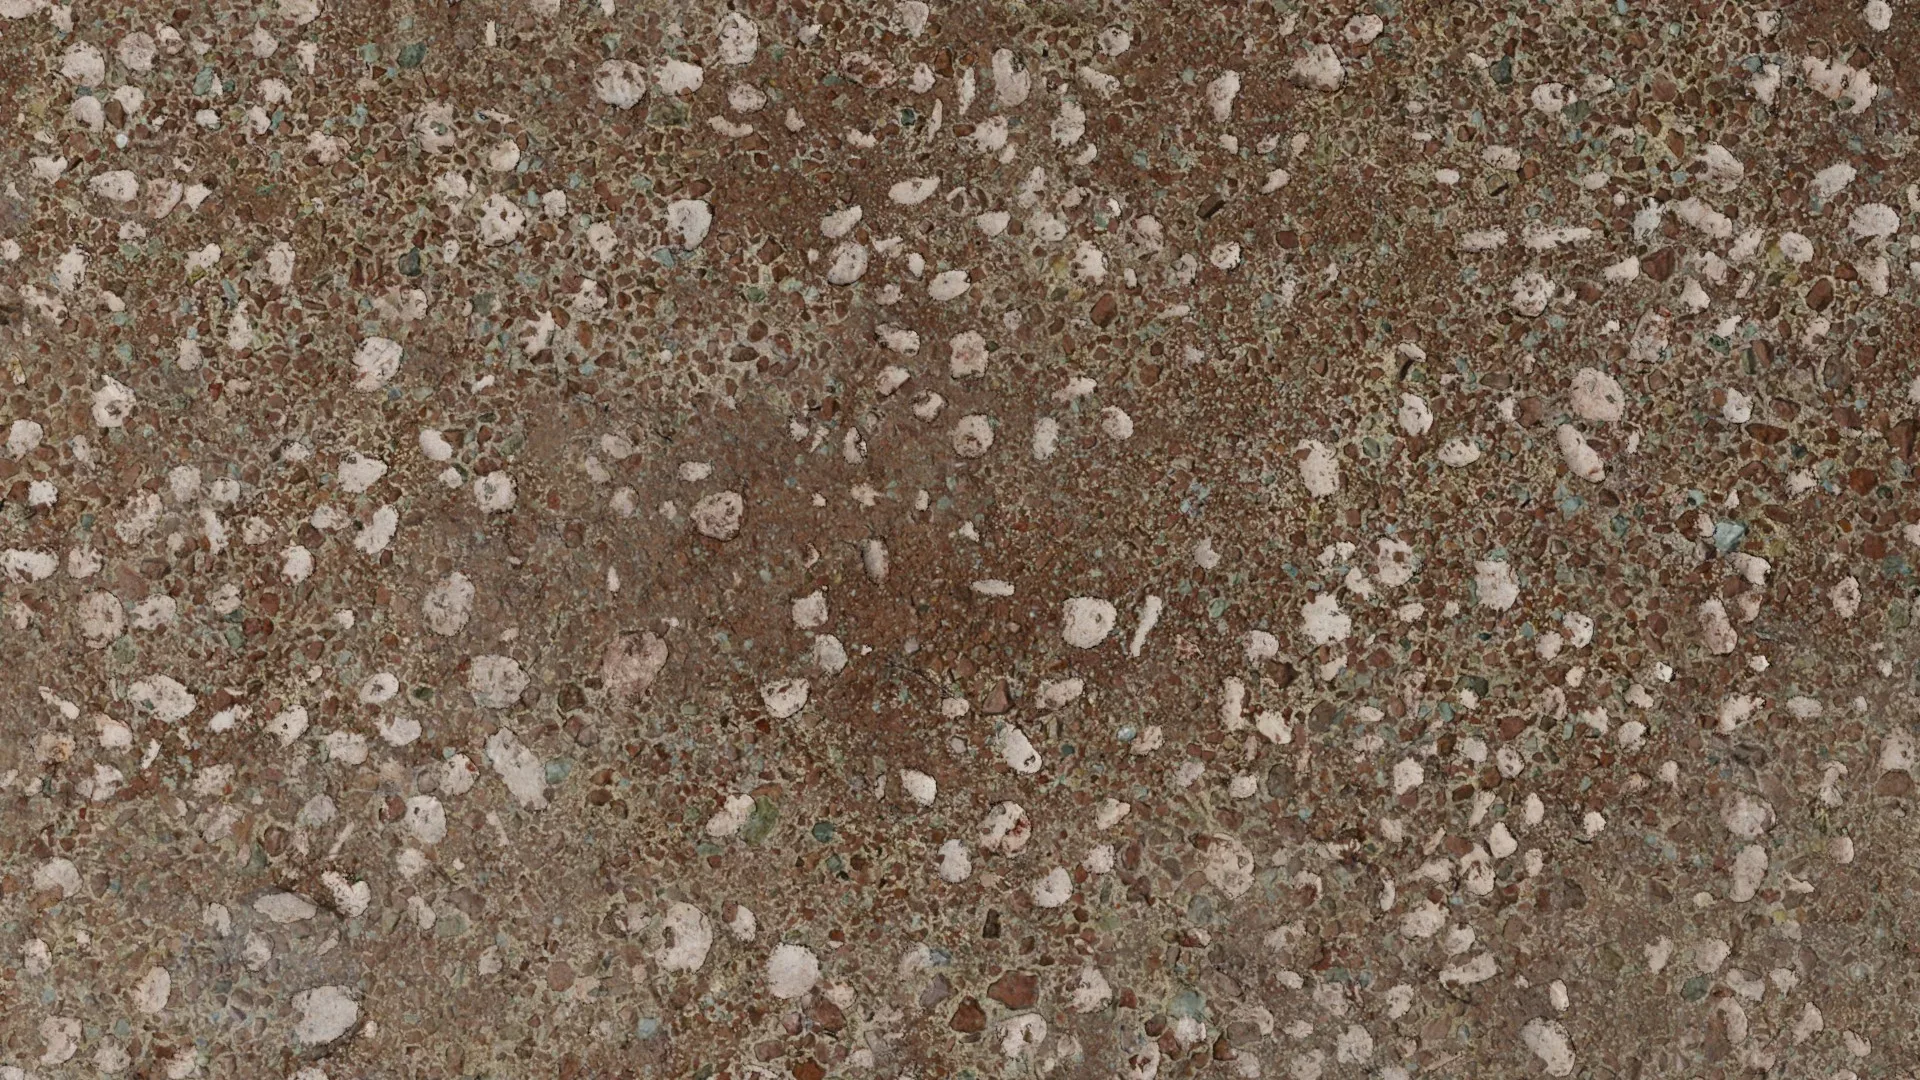 Gravel PBR Texture